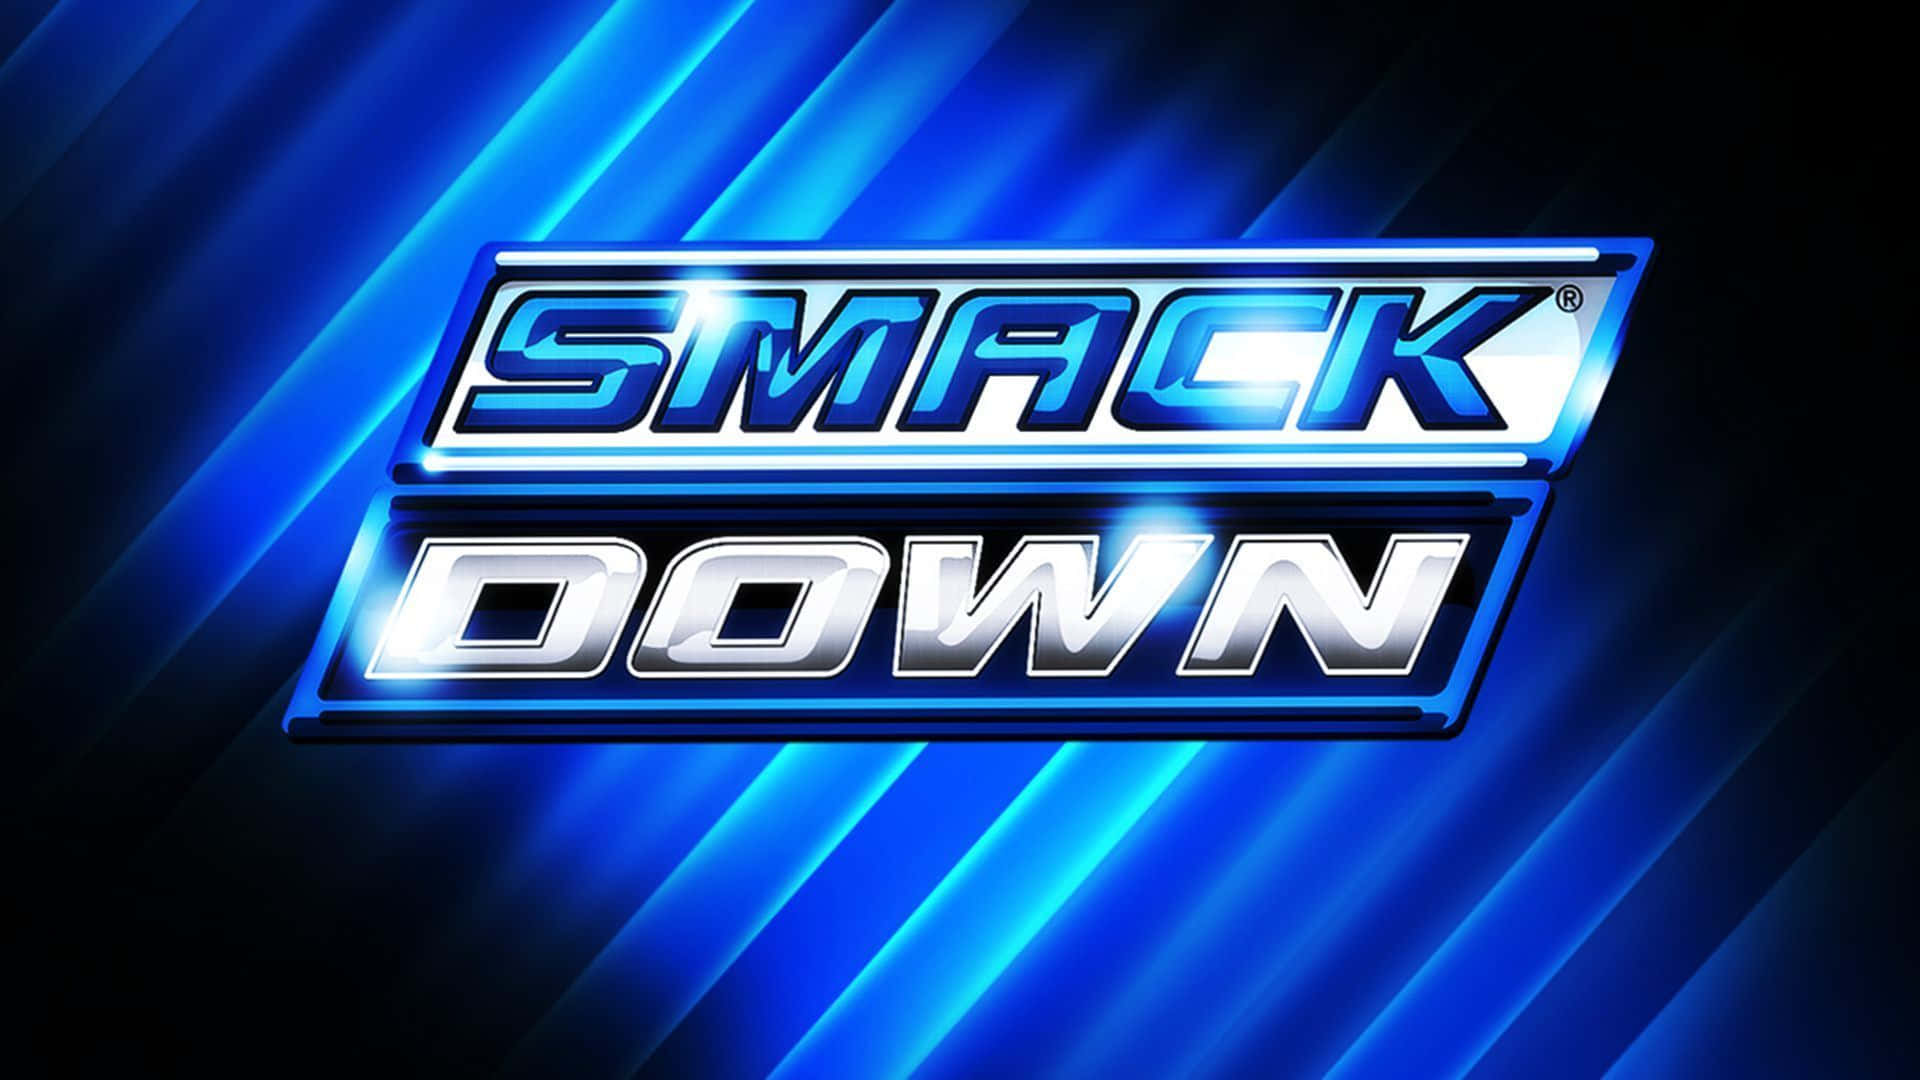 Wwe Smackdown Logo On A Blue Background Wallpaper